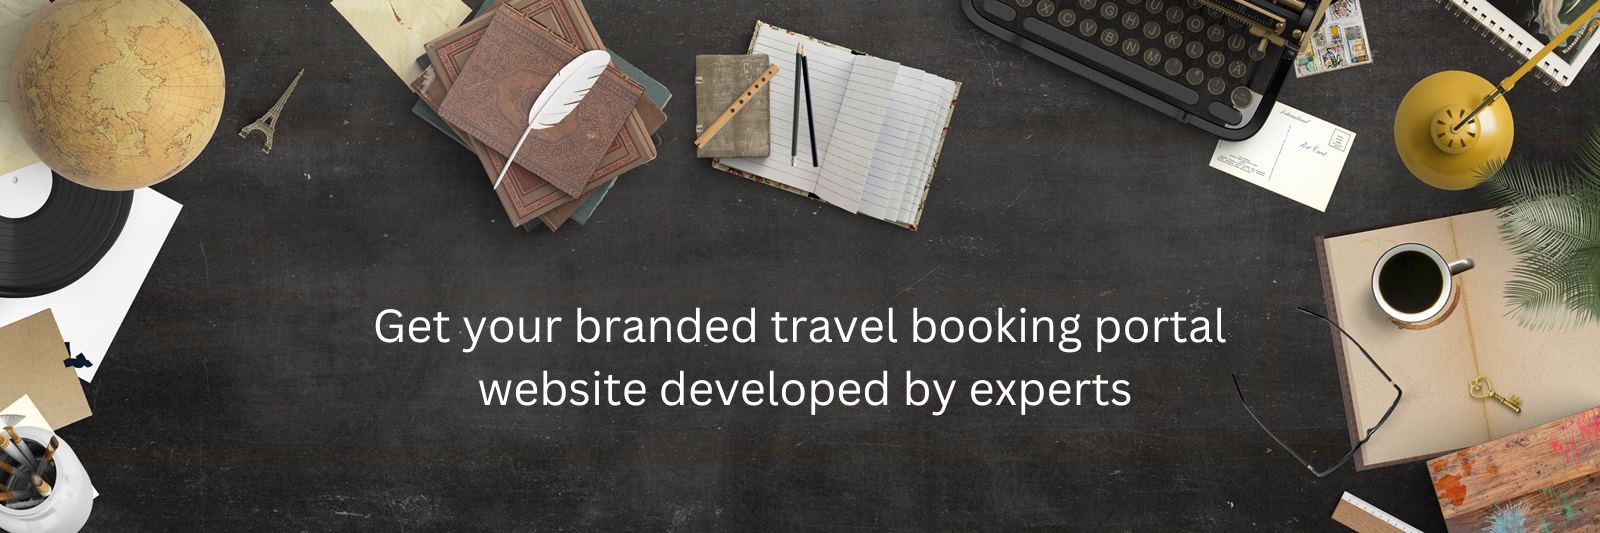 travel booking portal development company bangalore india